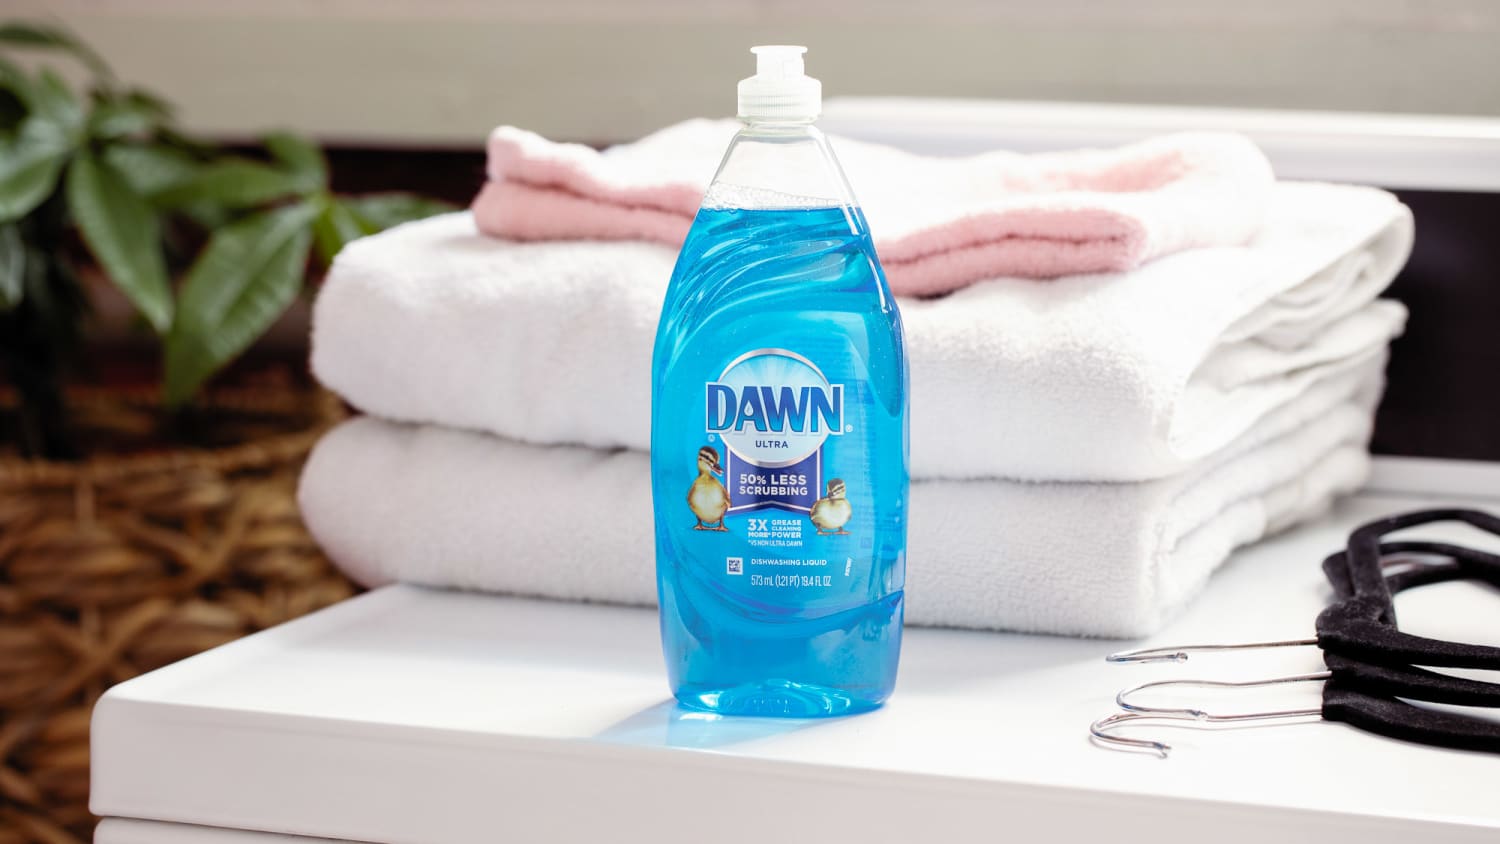 Dish soap, baking soda detergent recipe could damage dishwasher